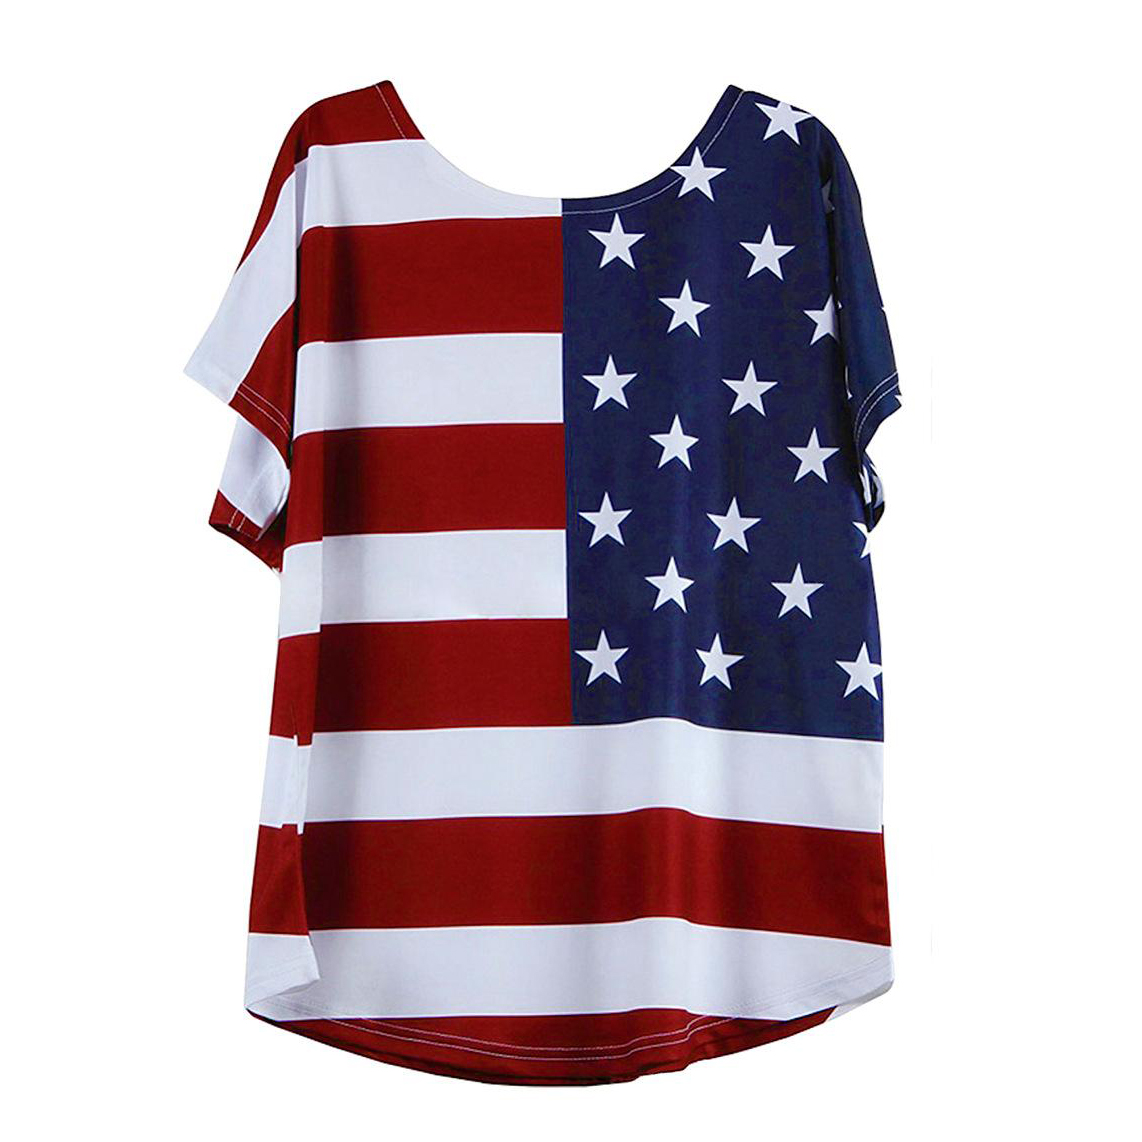 2019 wholesale price Make Your Own Shirt - american flag printed short sleeves uk flag t shirt – Gift